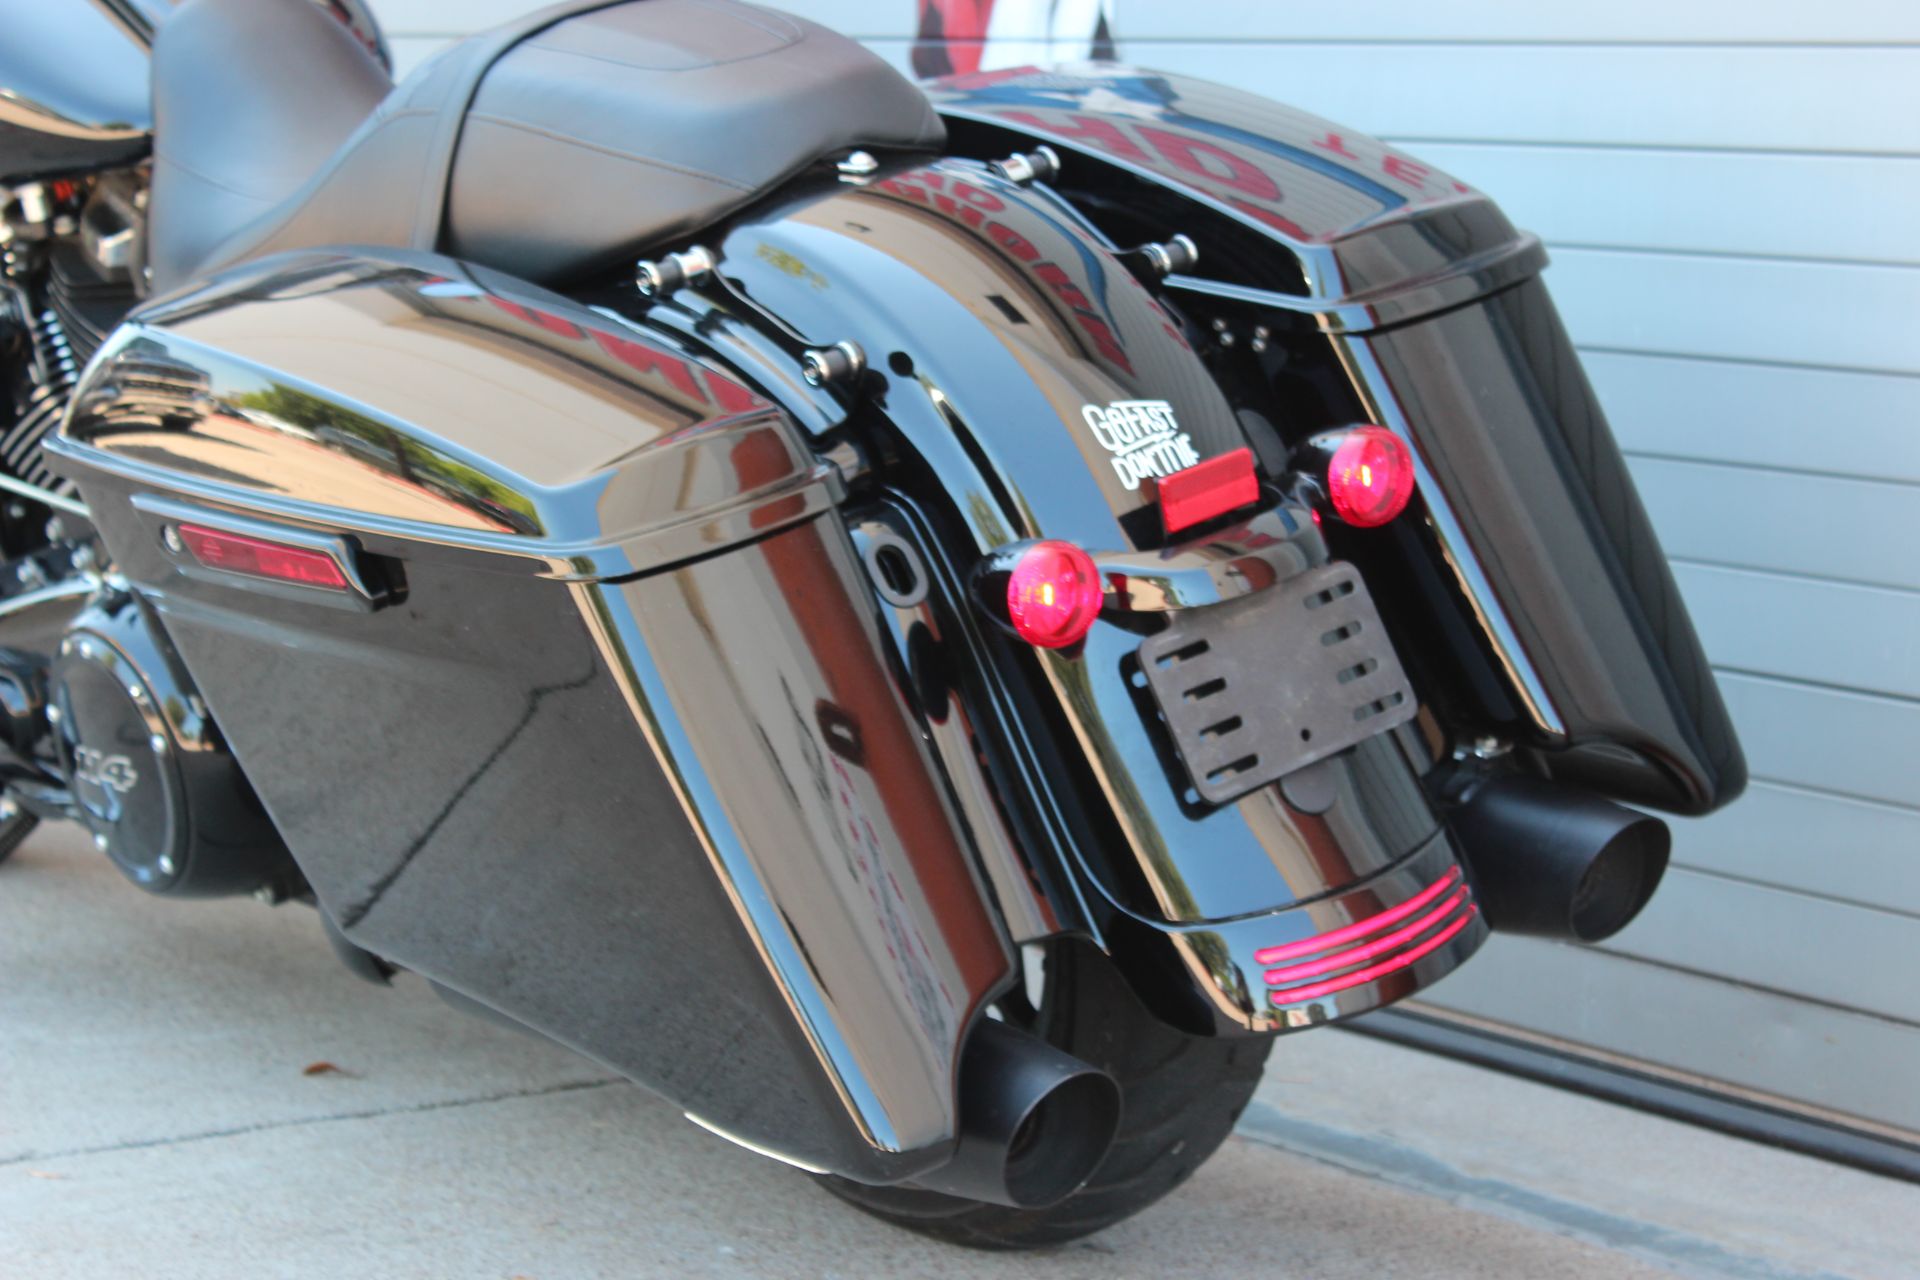 2020 Harley-Davidson Road Glide® Special in Grand Prairie, Texas - Photo 21